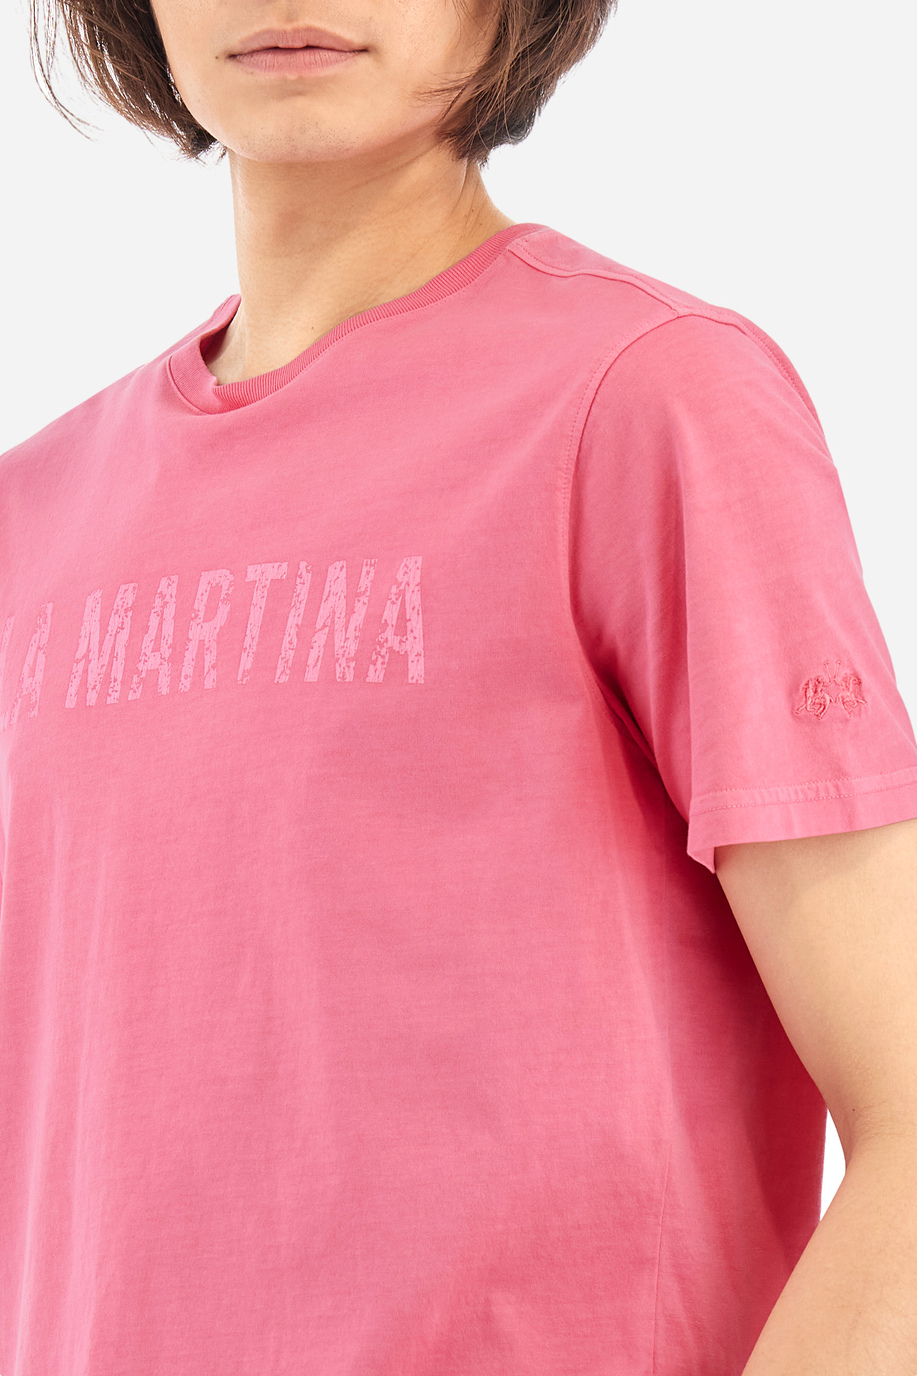 T-shirt regular fit in cotone - Yule - test 2 | La Martina - Official Online Shop